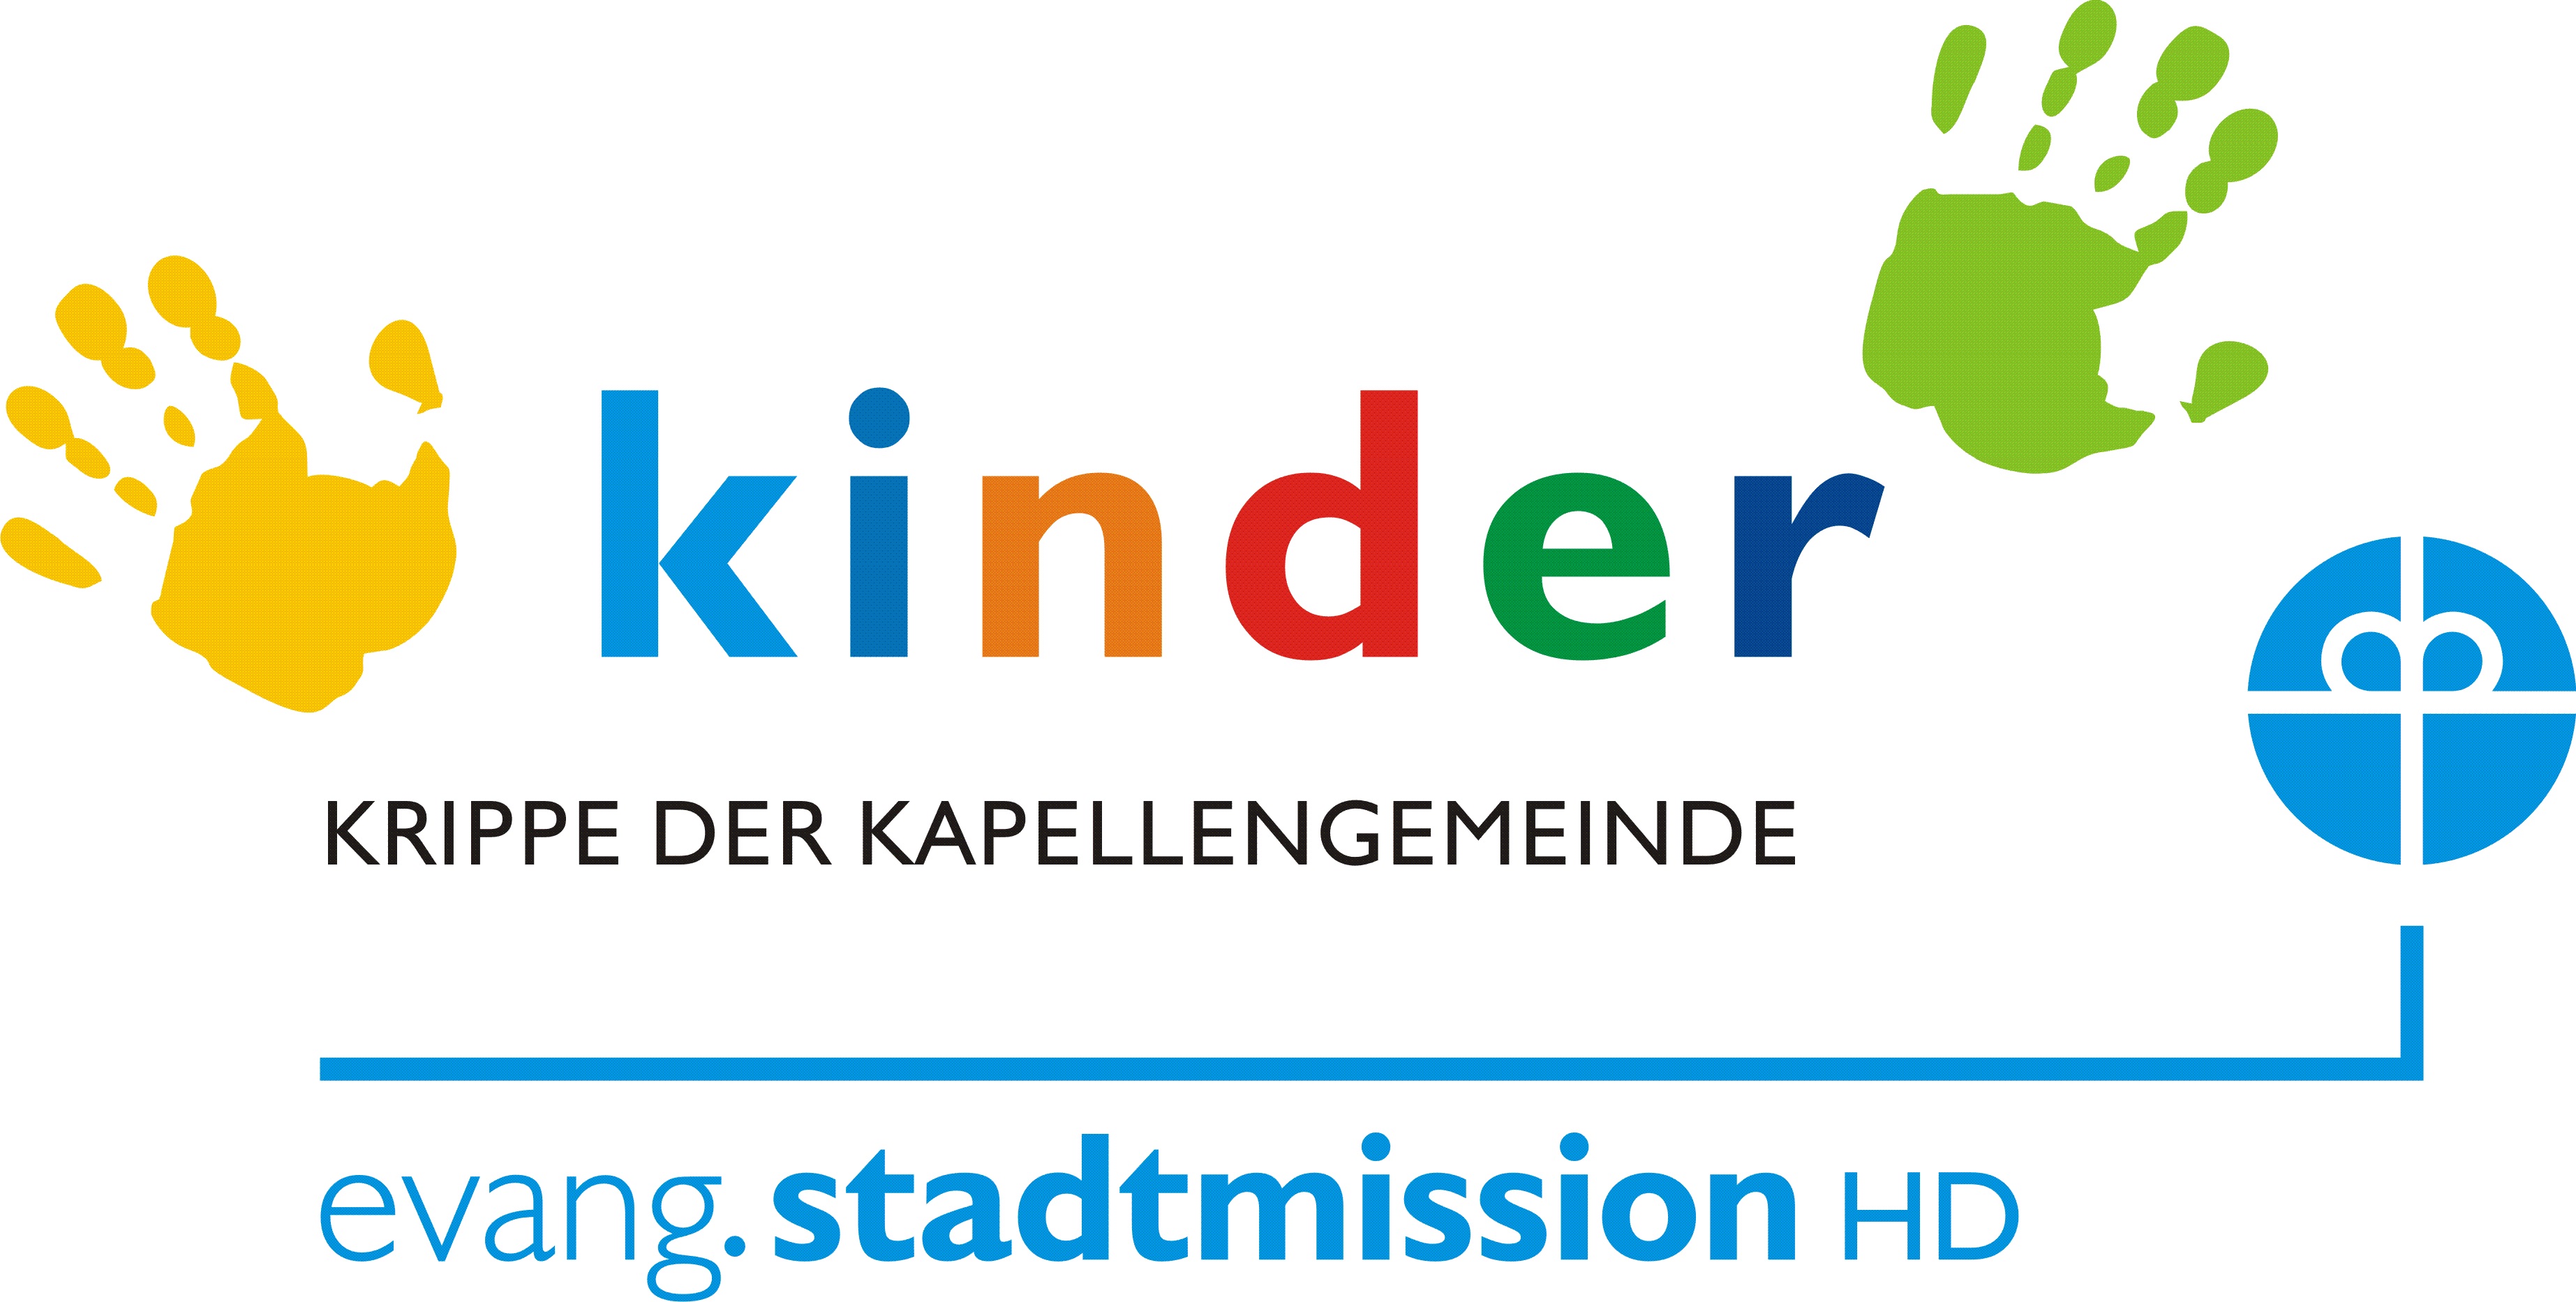 Trägergesellschaft der Evang. Stadtmission Heidelberg gGmbH - Kinderkrippe der Evang. Kapellengemeinde